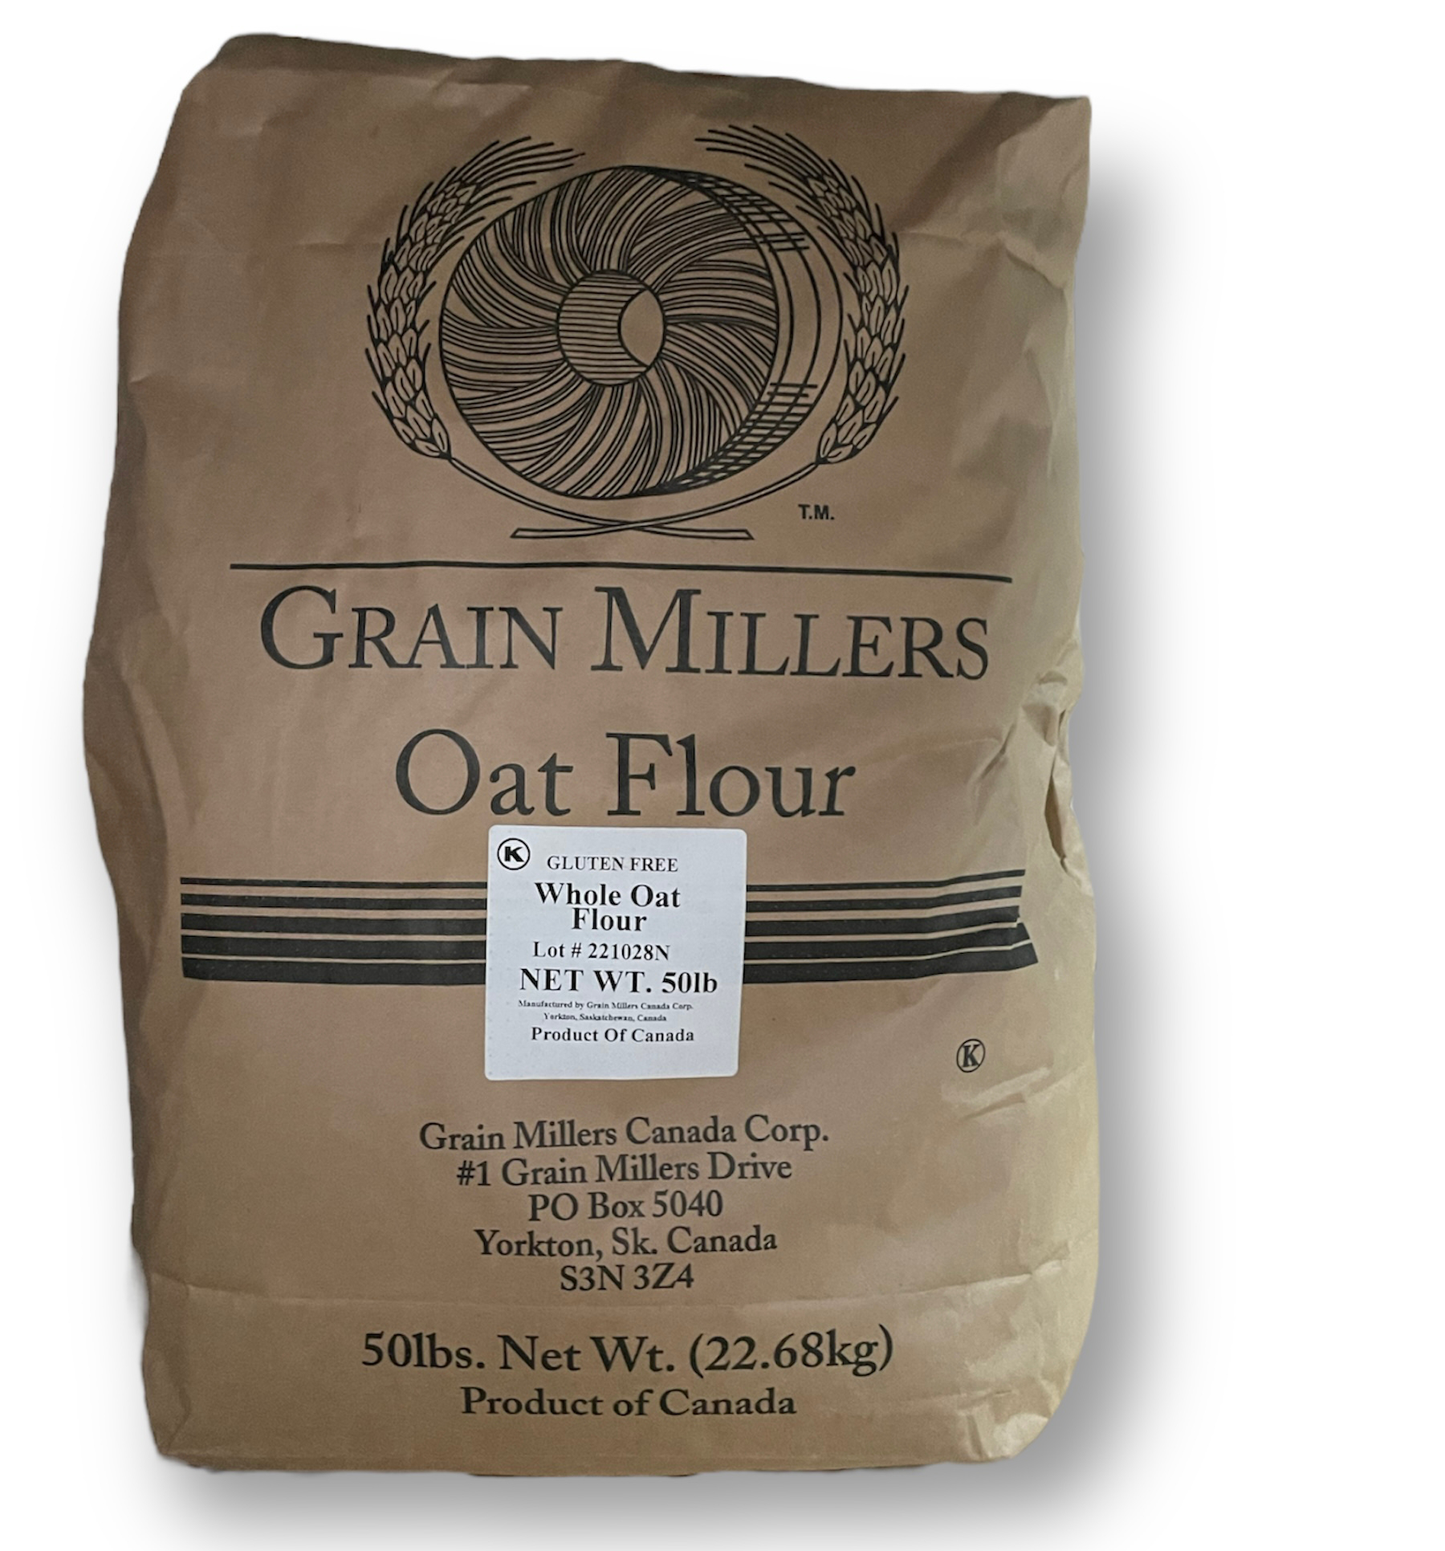 Gluten Free Oat Flour